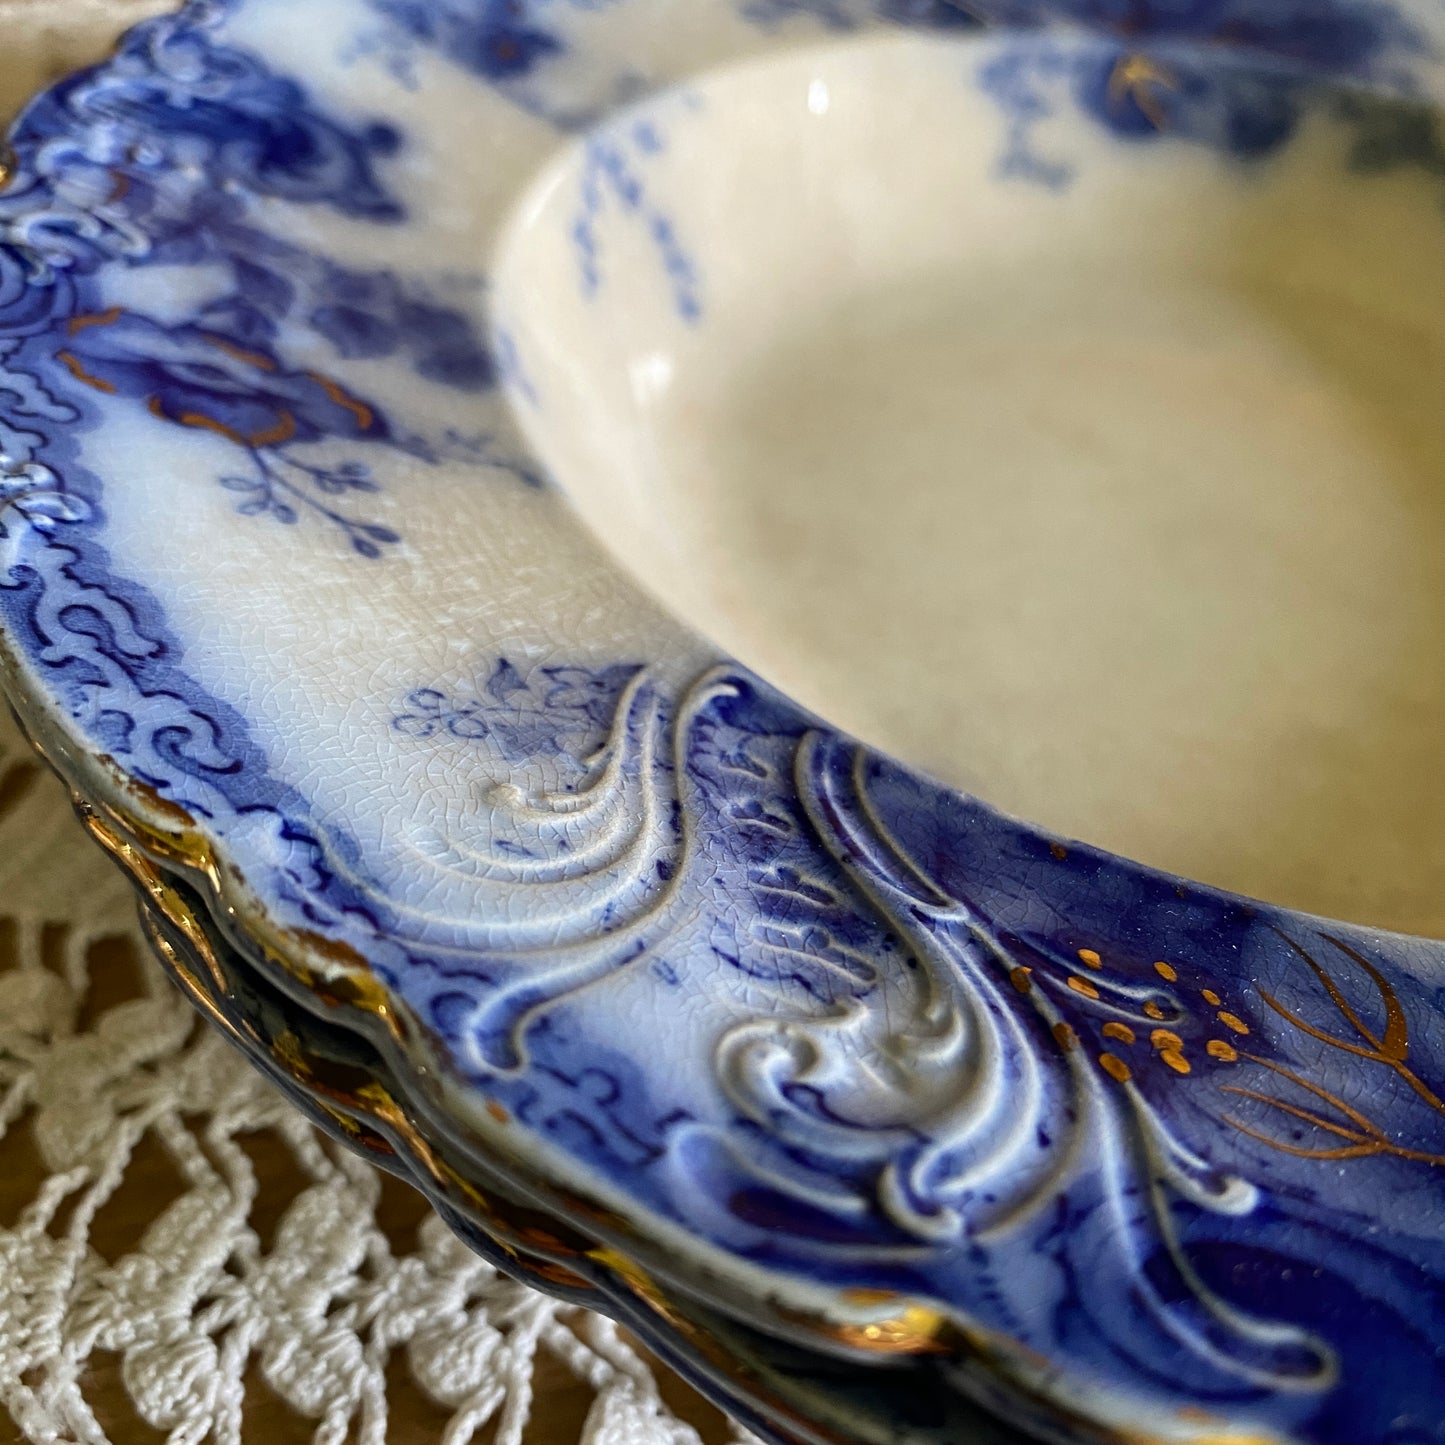 Flow Blue Soup Bowls, Set of 3 Royal Albion by Cliff